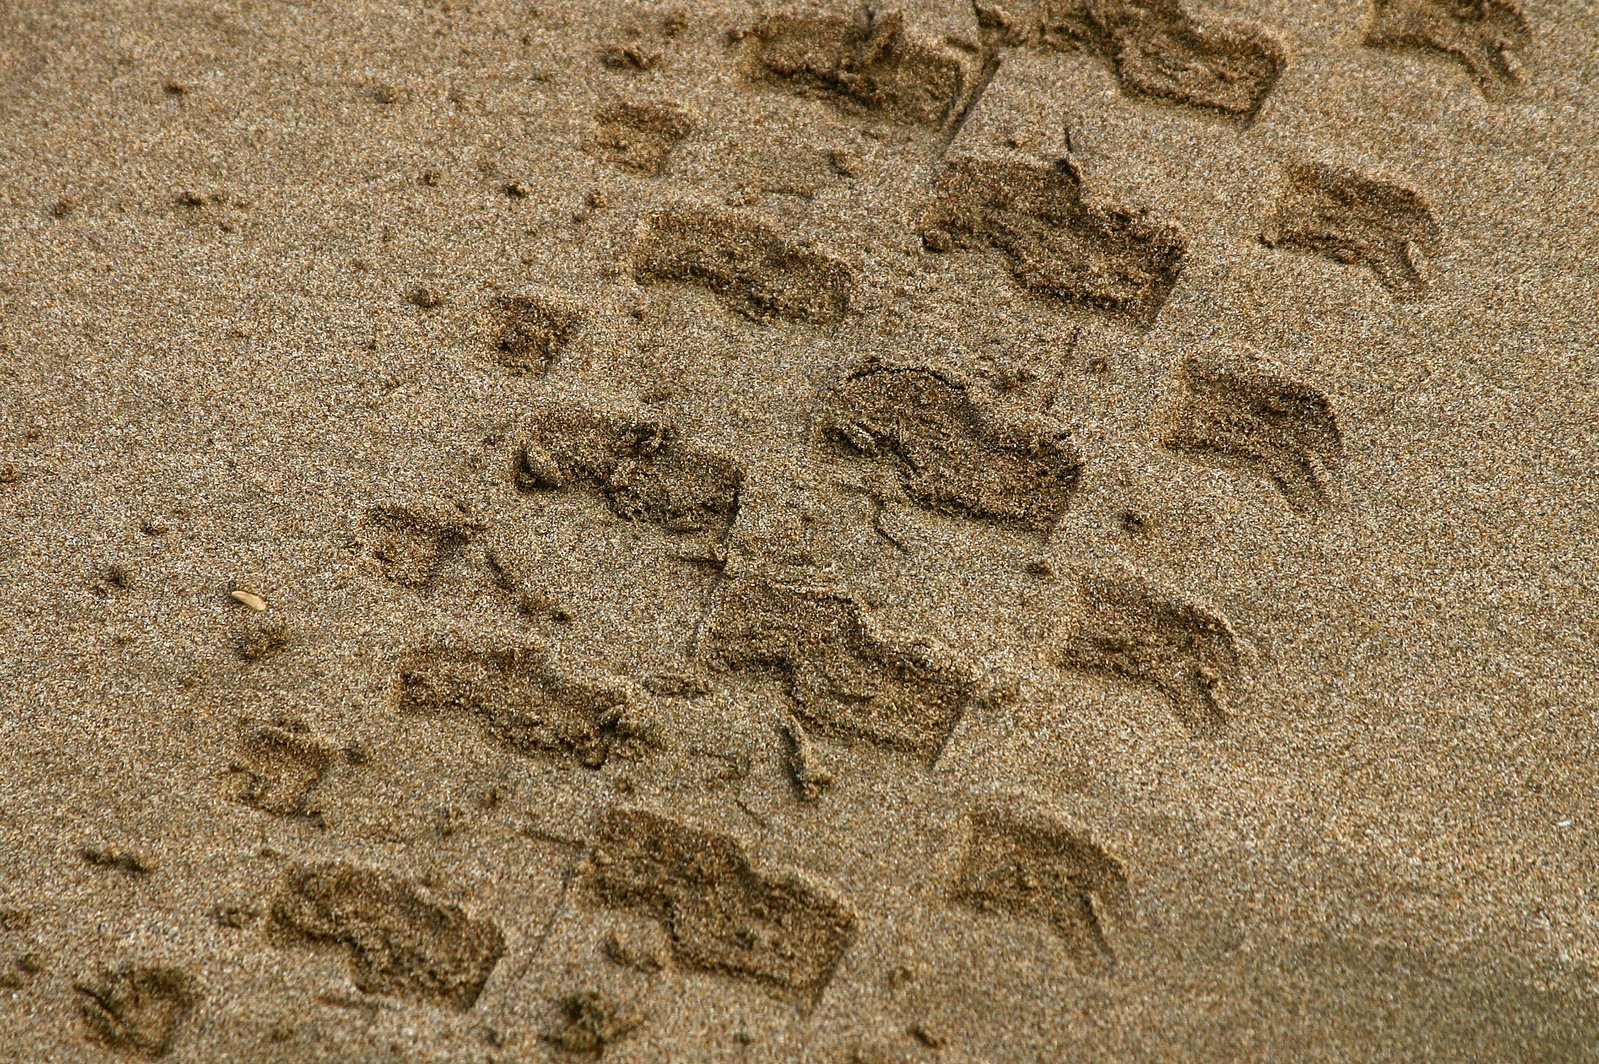 footprints make a trail across sand on the beach